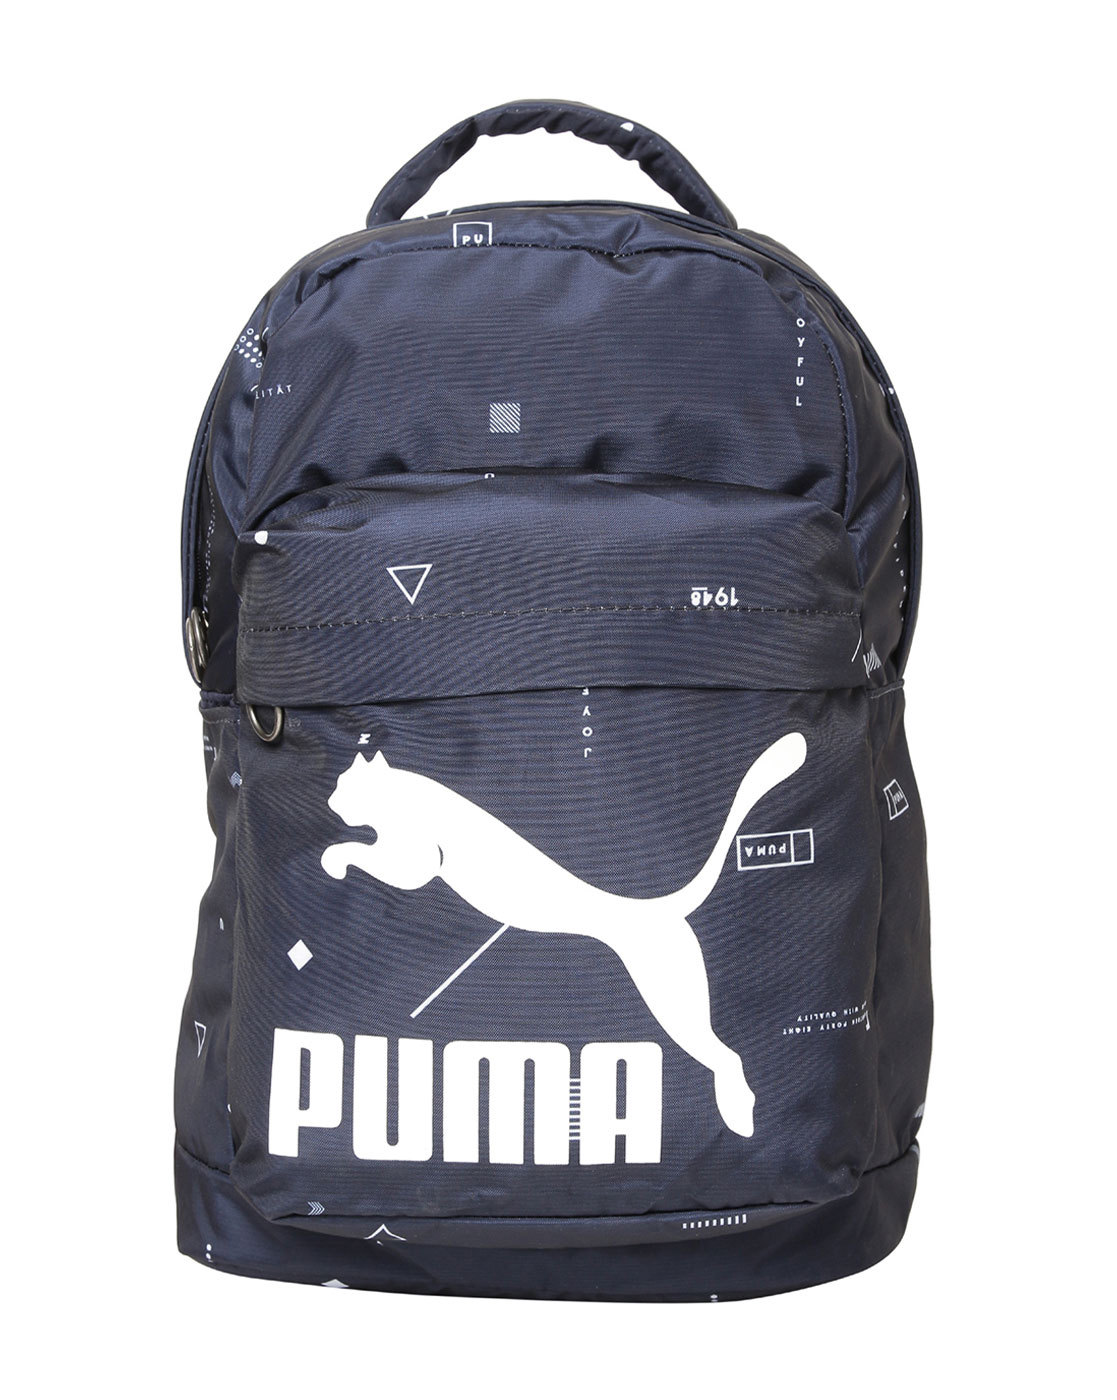 puma 18 inch laptop backpack